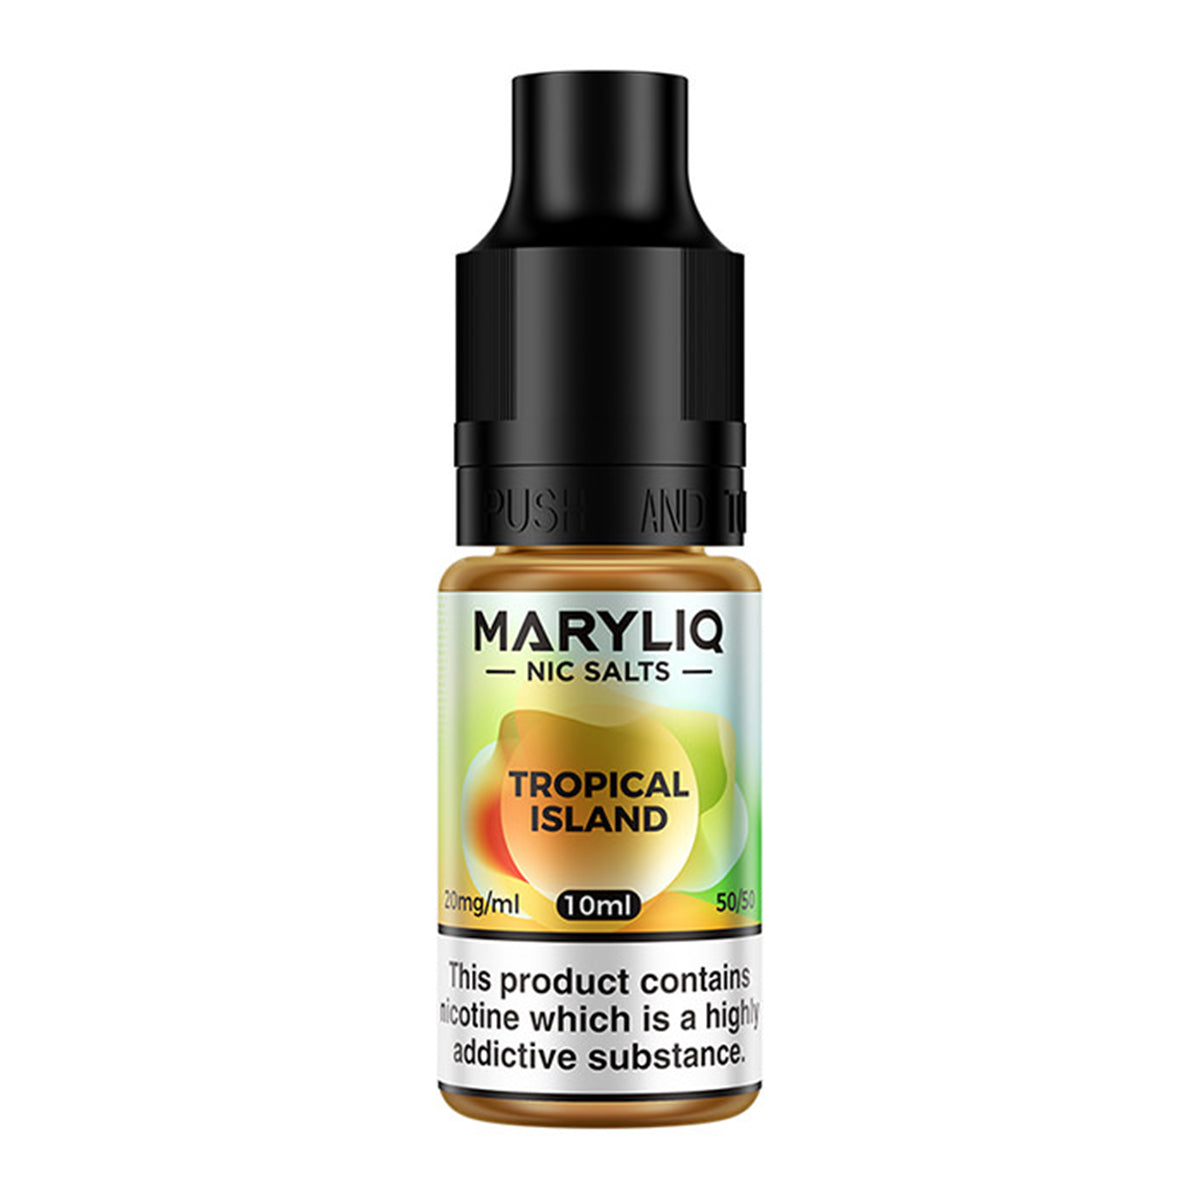 Tropical Island 10ml Nicotine Salt by Lost Mary Maryliq